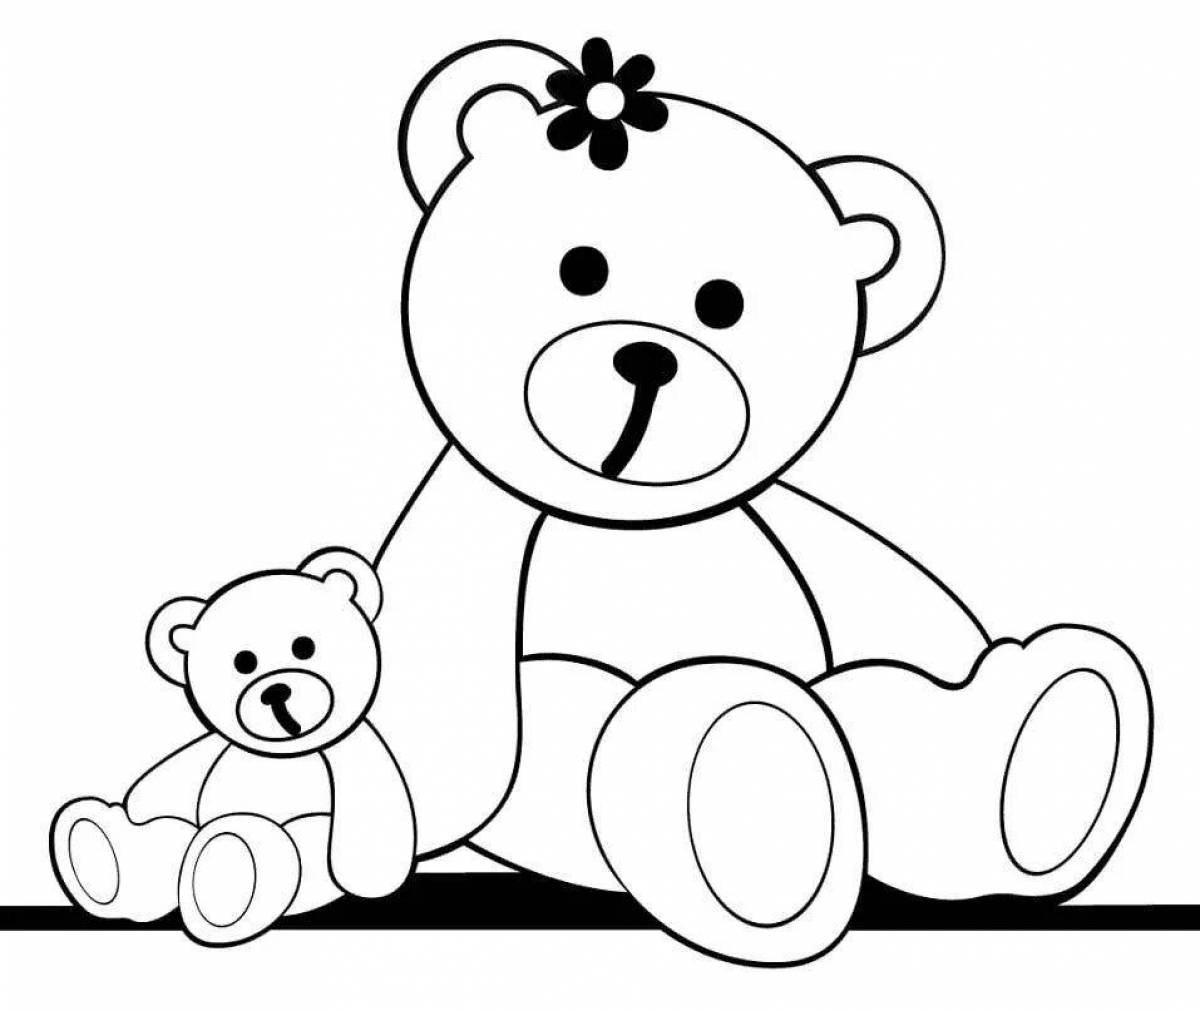 Coloring book hugging teddy bear